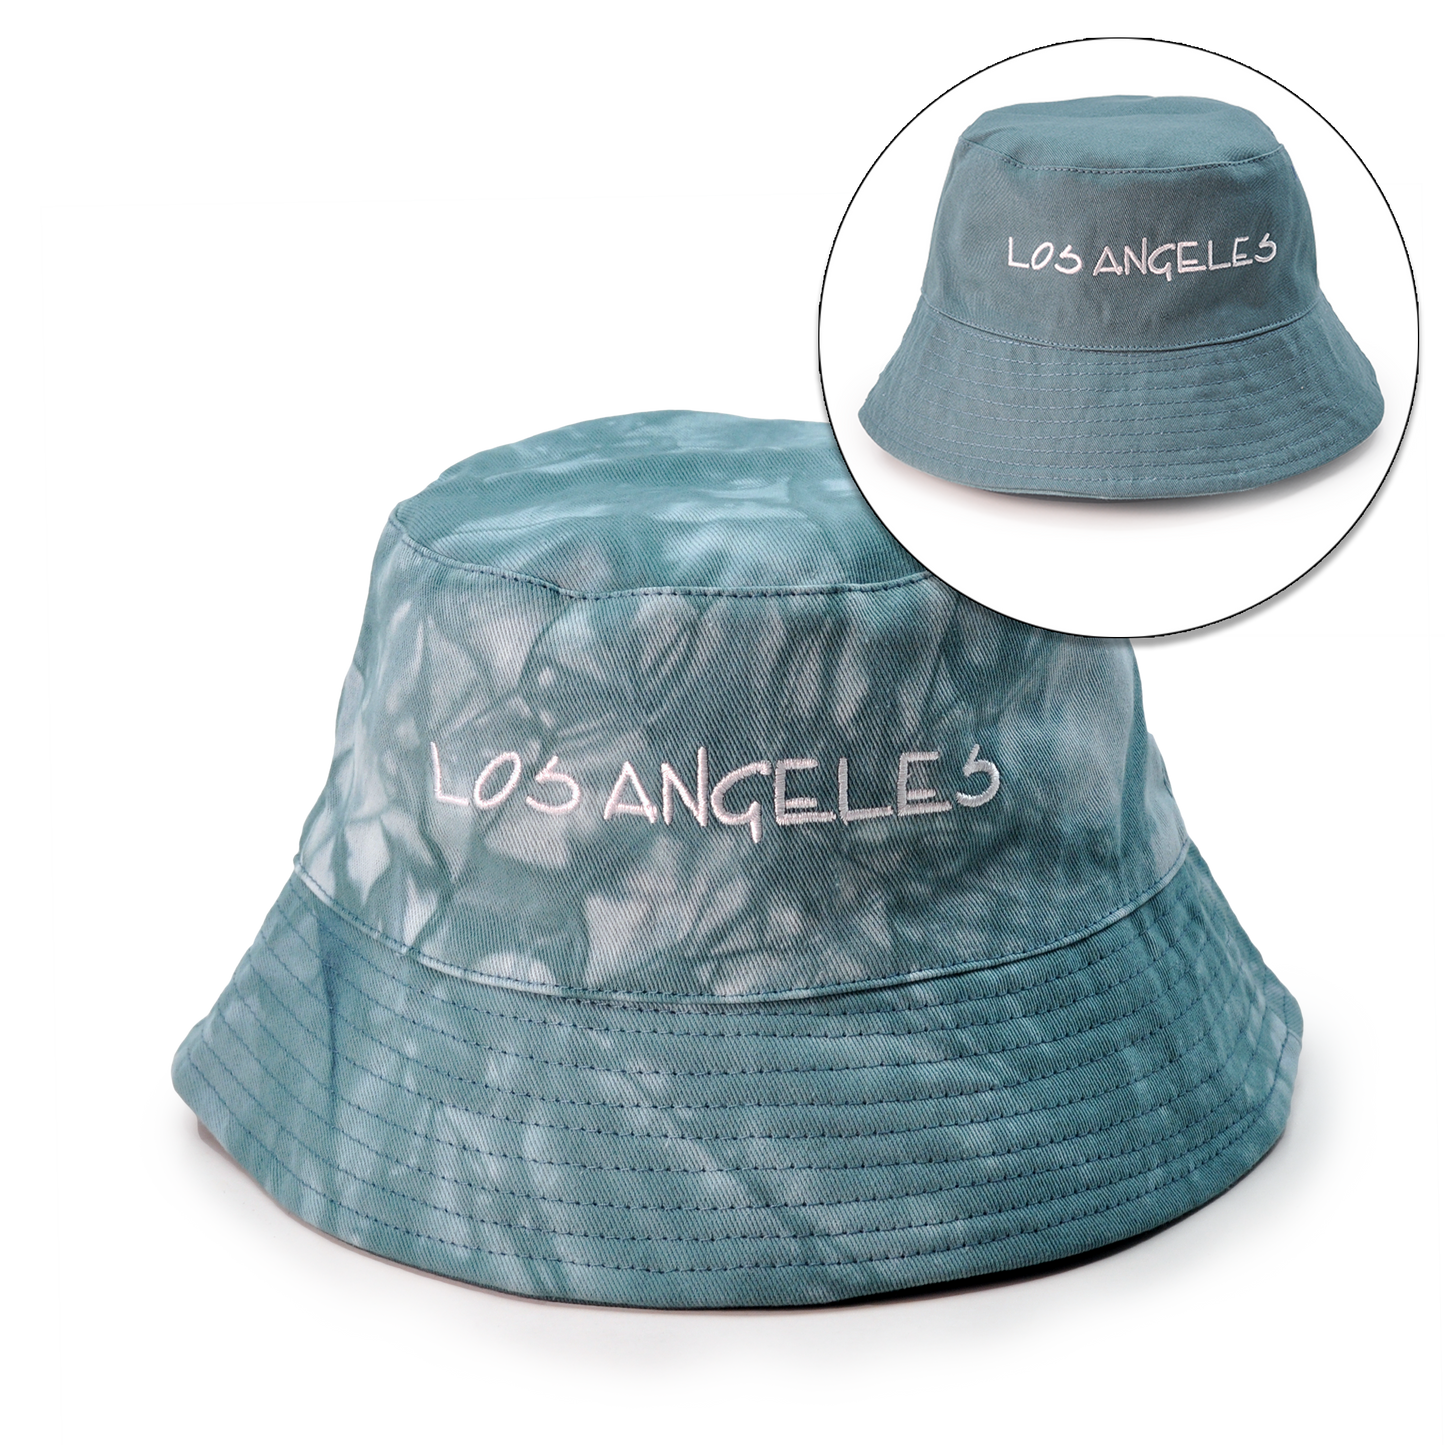 Reversible Your Beach City Unisex 100% Cotton Packable Summer Travel Bucket Beach Sun Hat Outdoor Cap. (Tie Dye Green/Green)